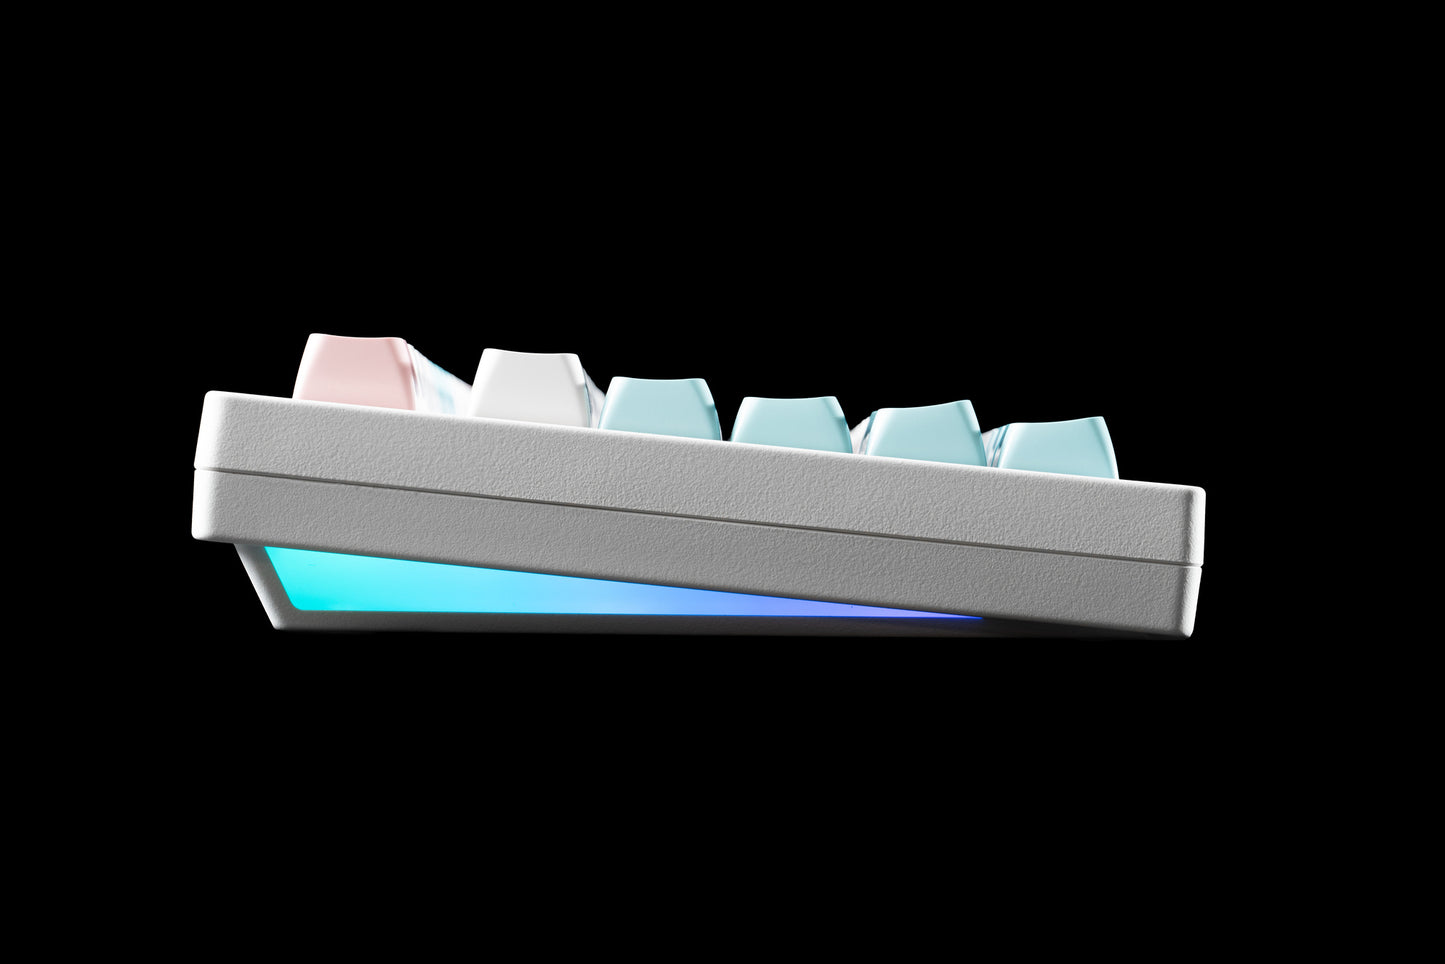 VELOCIFIRE RX870 WIRELESS 2.4G RGB MECHANICAL KEYBOARD